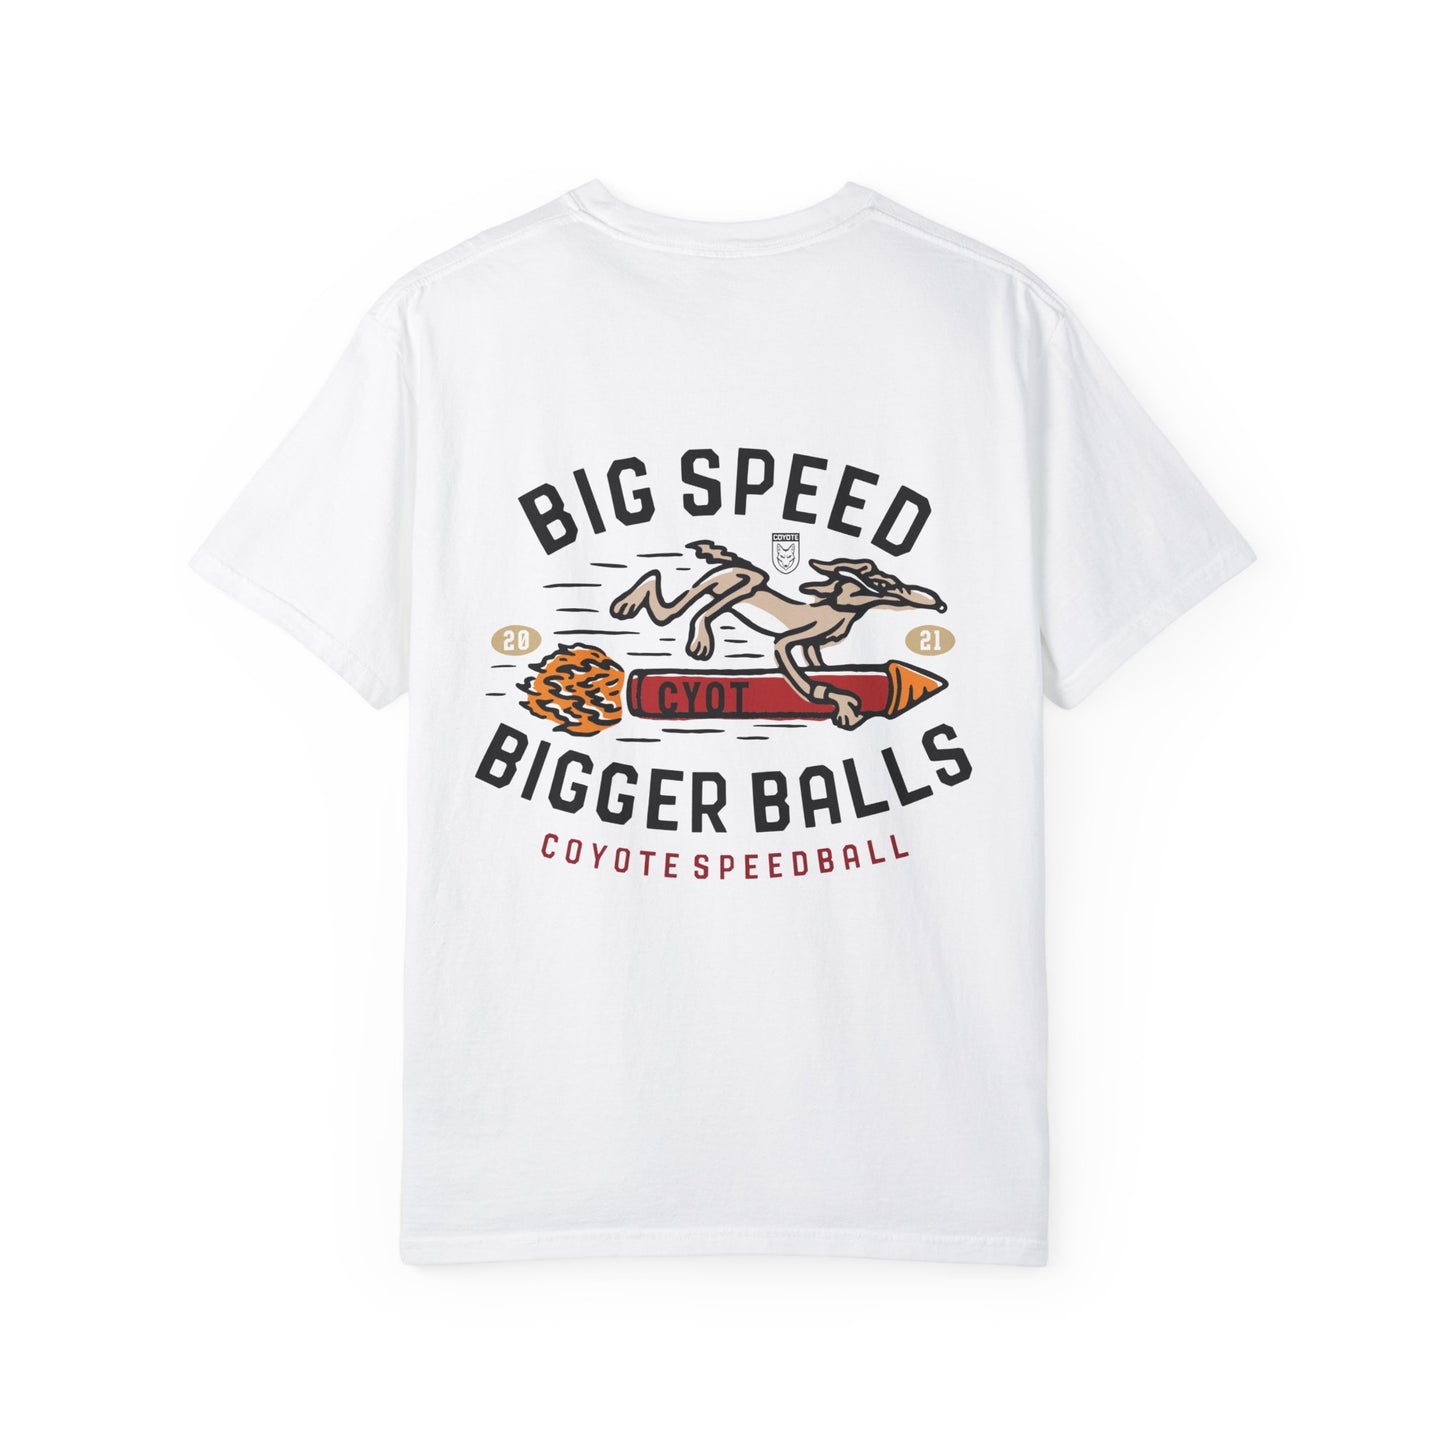 Big Speed Bigger Balls Tee